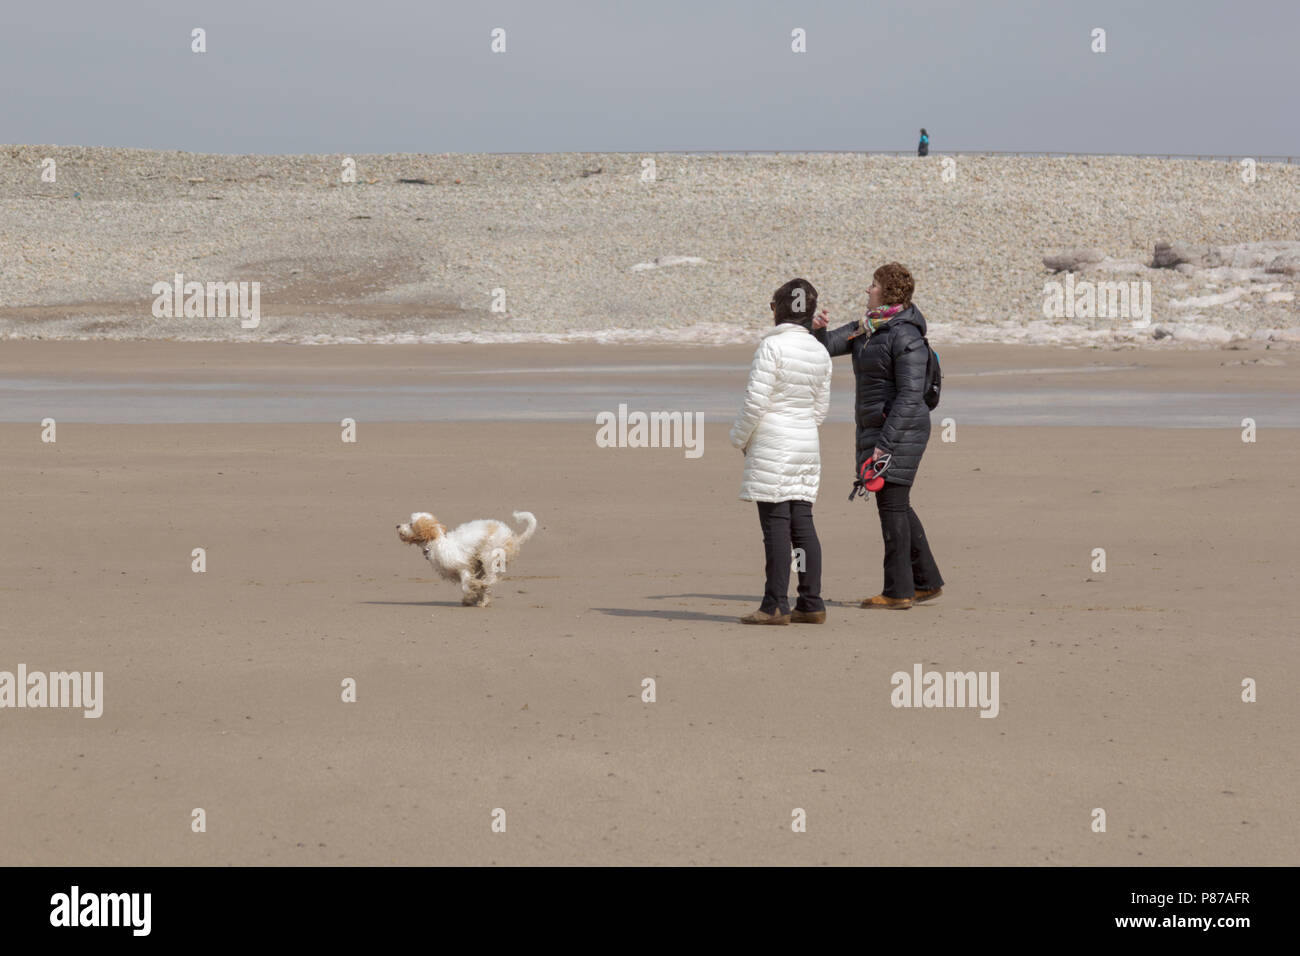 Porthcawl, South Wales, UK. 14. April 2018. UK Wetter: Hund Spaziergänger ihren Hund Spaziergang bei Porthcawl Beach, South Wales an einem sonnigen Tag. Stockfoto